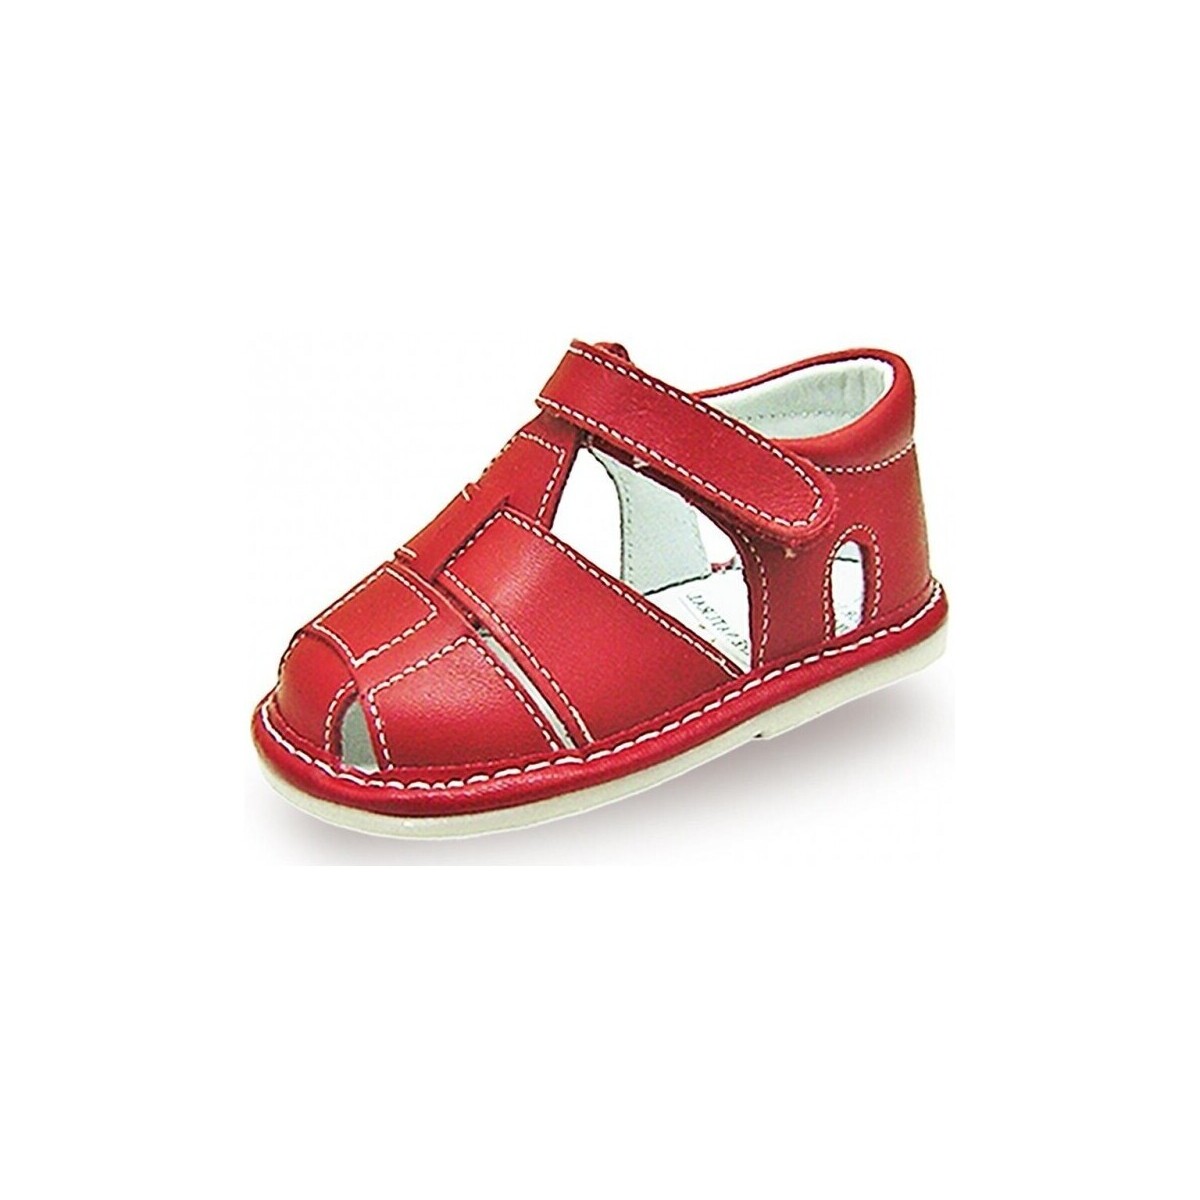 Sko Sandaler Colores 21847-15 Rød